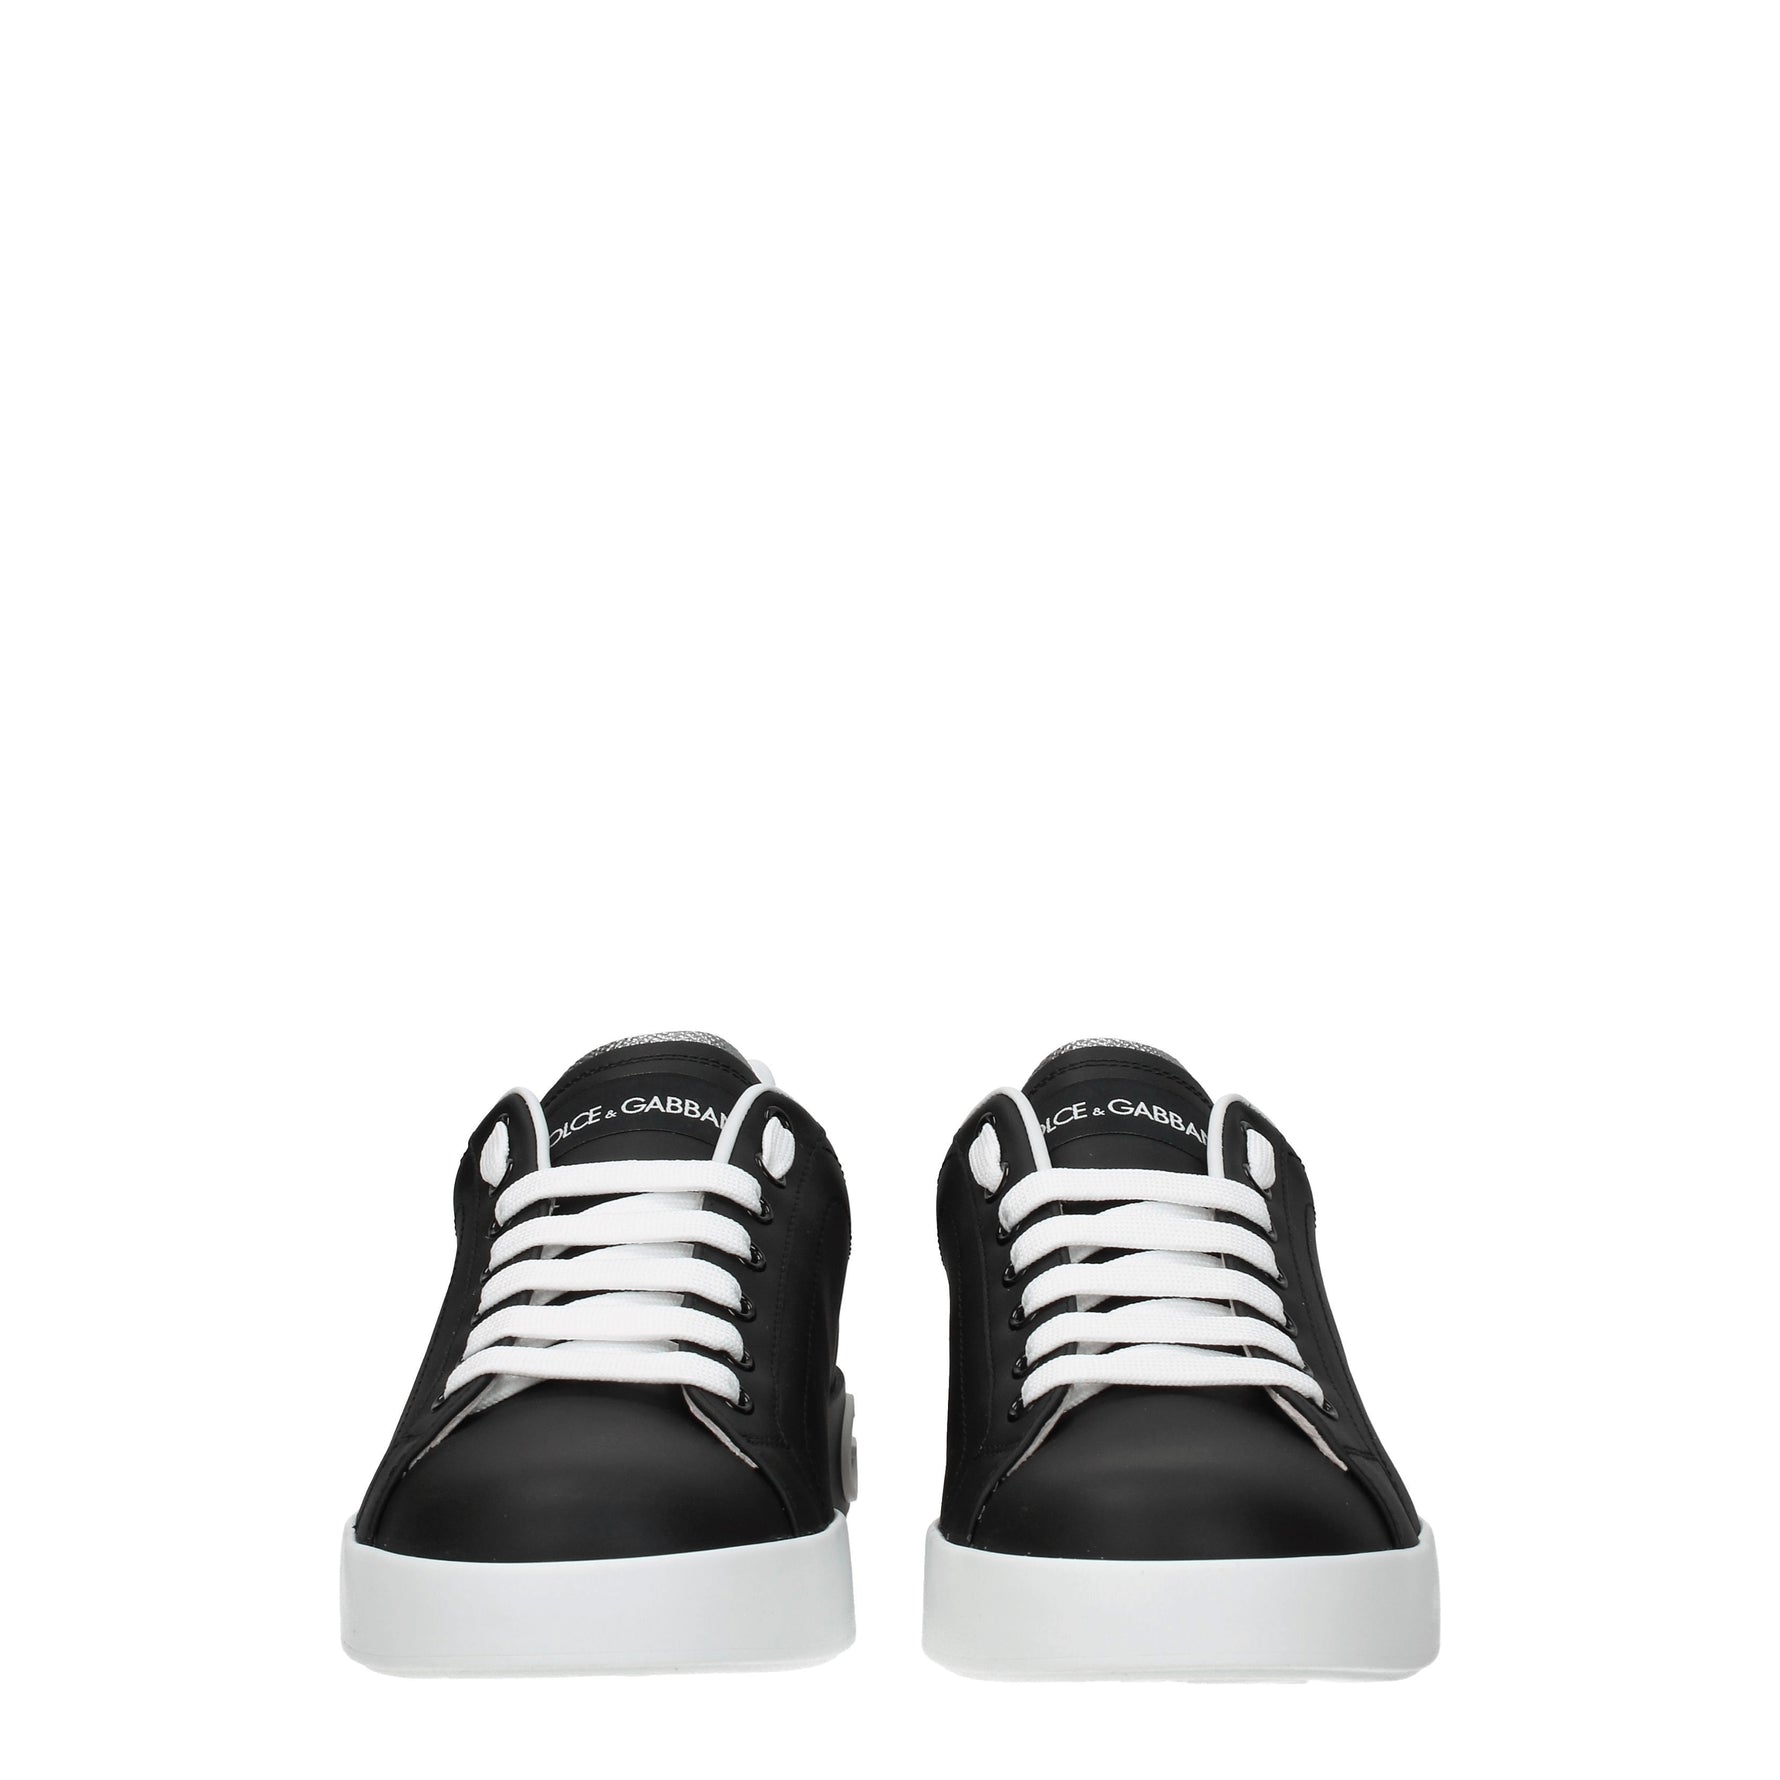 Dolce&Gabbana Sneakers Uomo Pelle Nero Argento